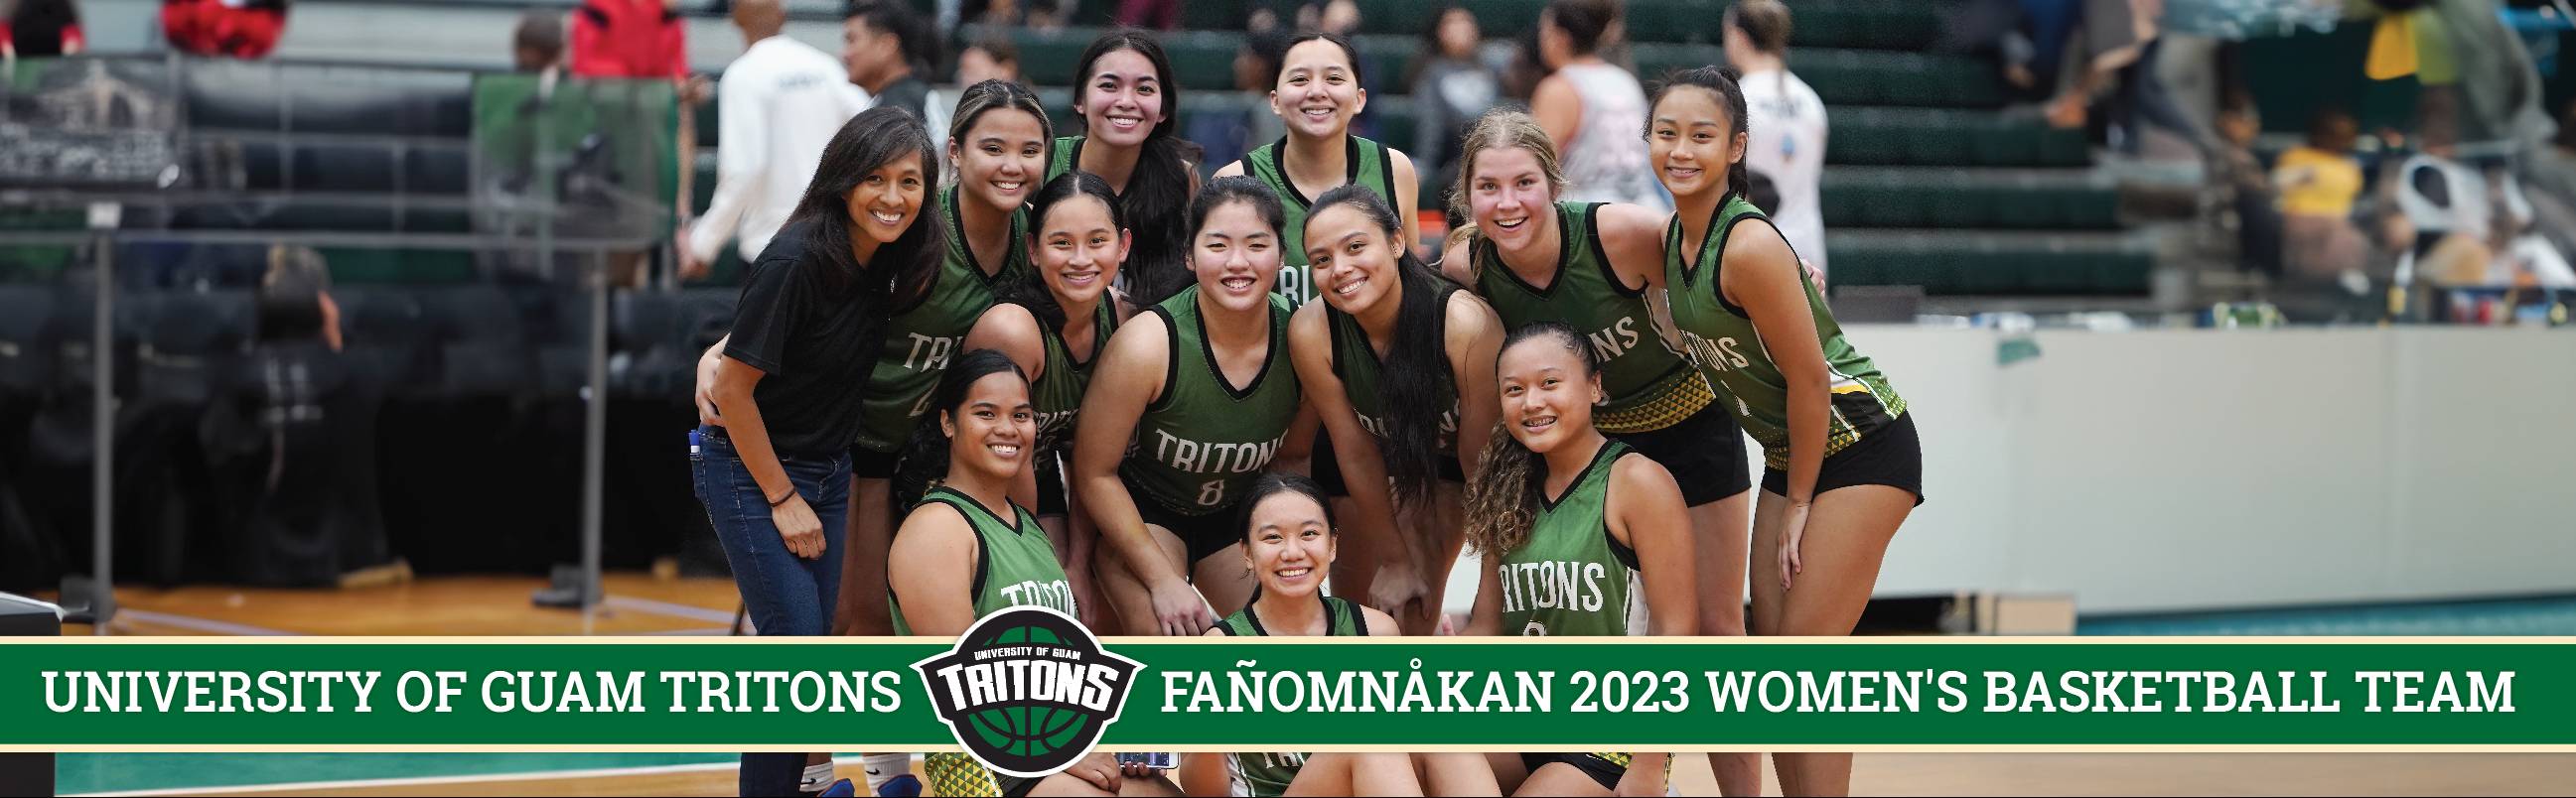 Triton Women's Basketball Team Fanomnakan 2023